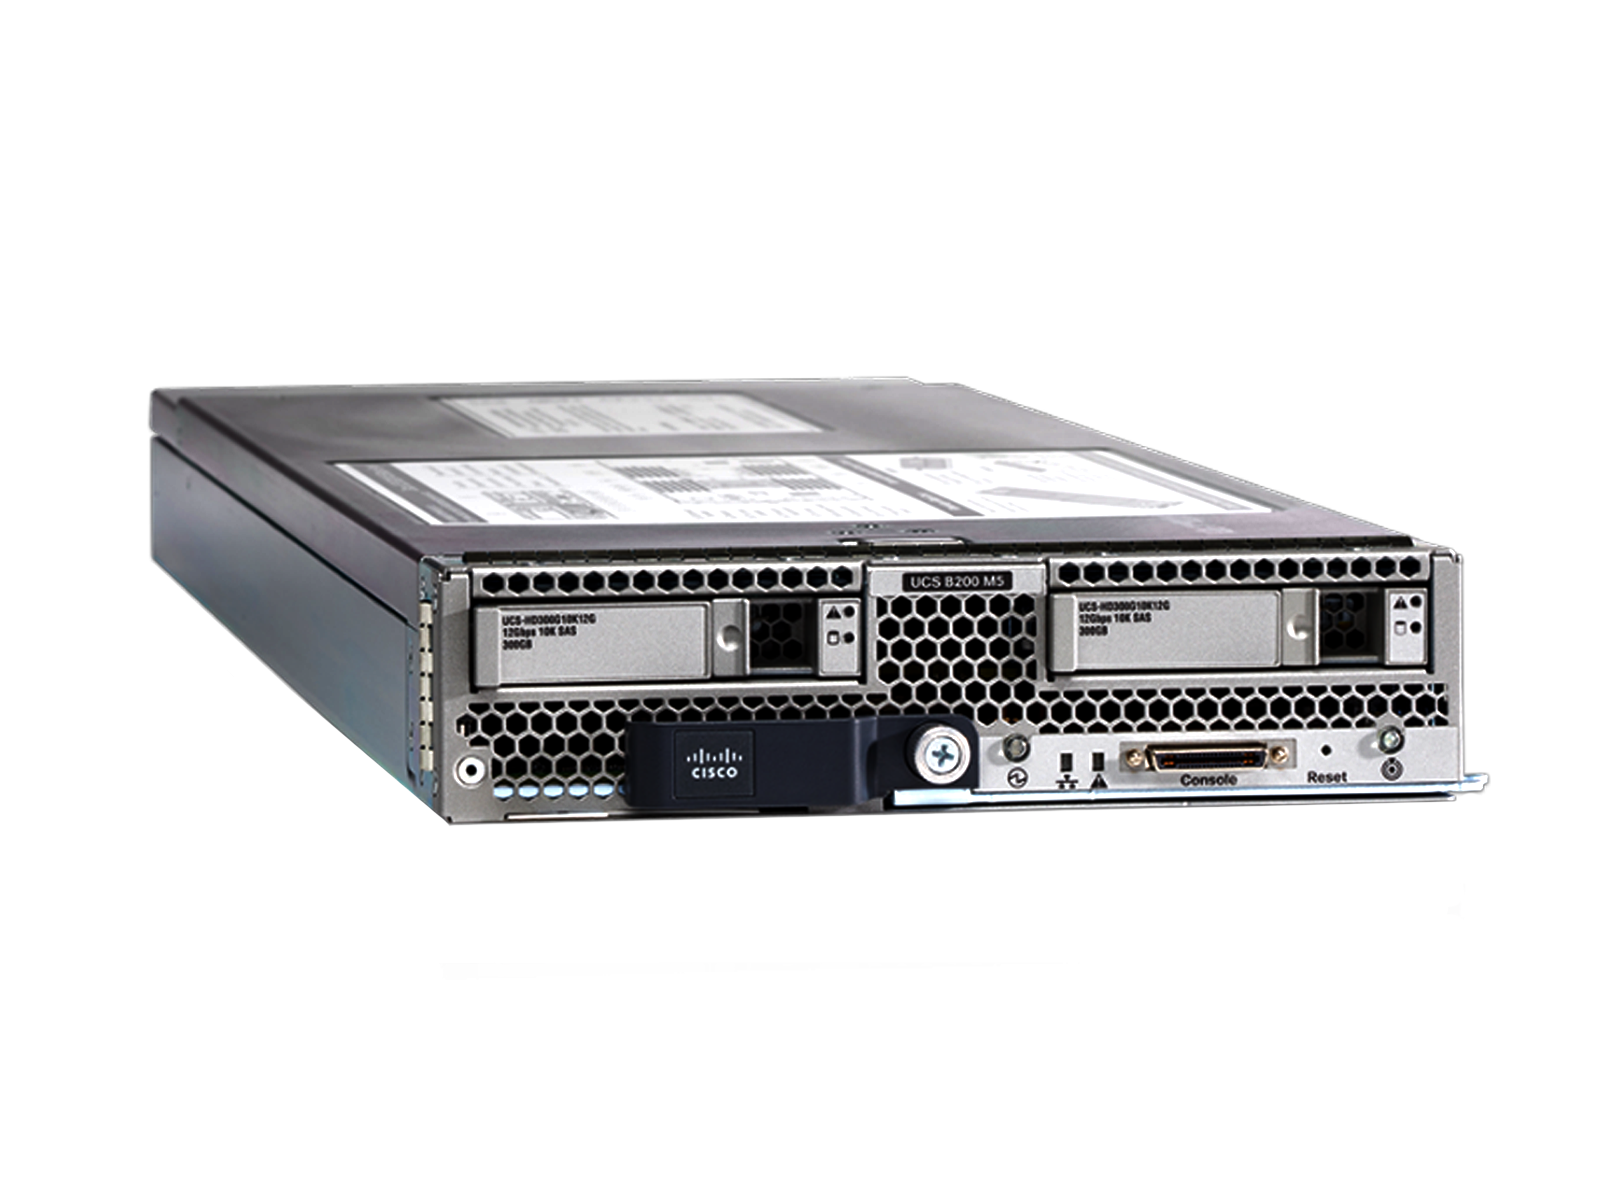 Cisco UCSB-B200-M5 UCS B200 M5 Blade Server Manufacturer Refurbished Barebone.